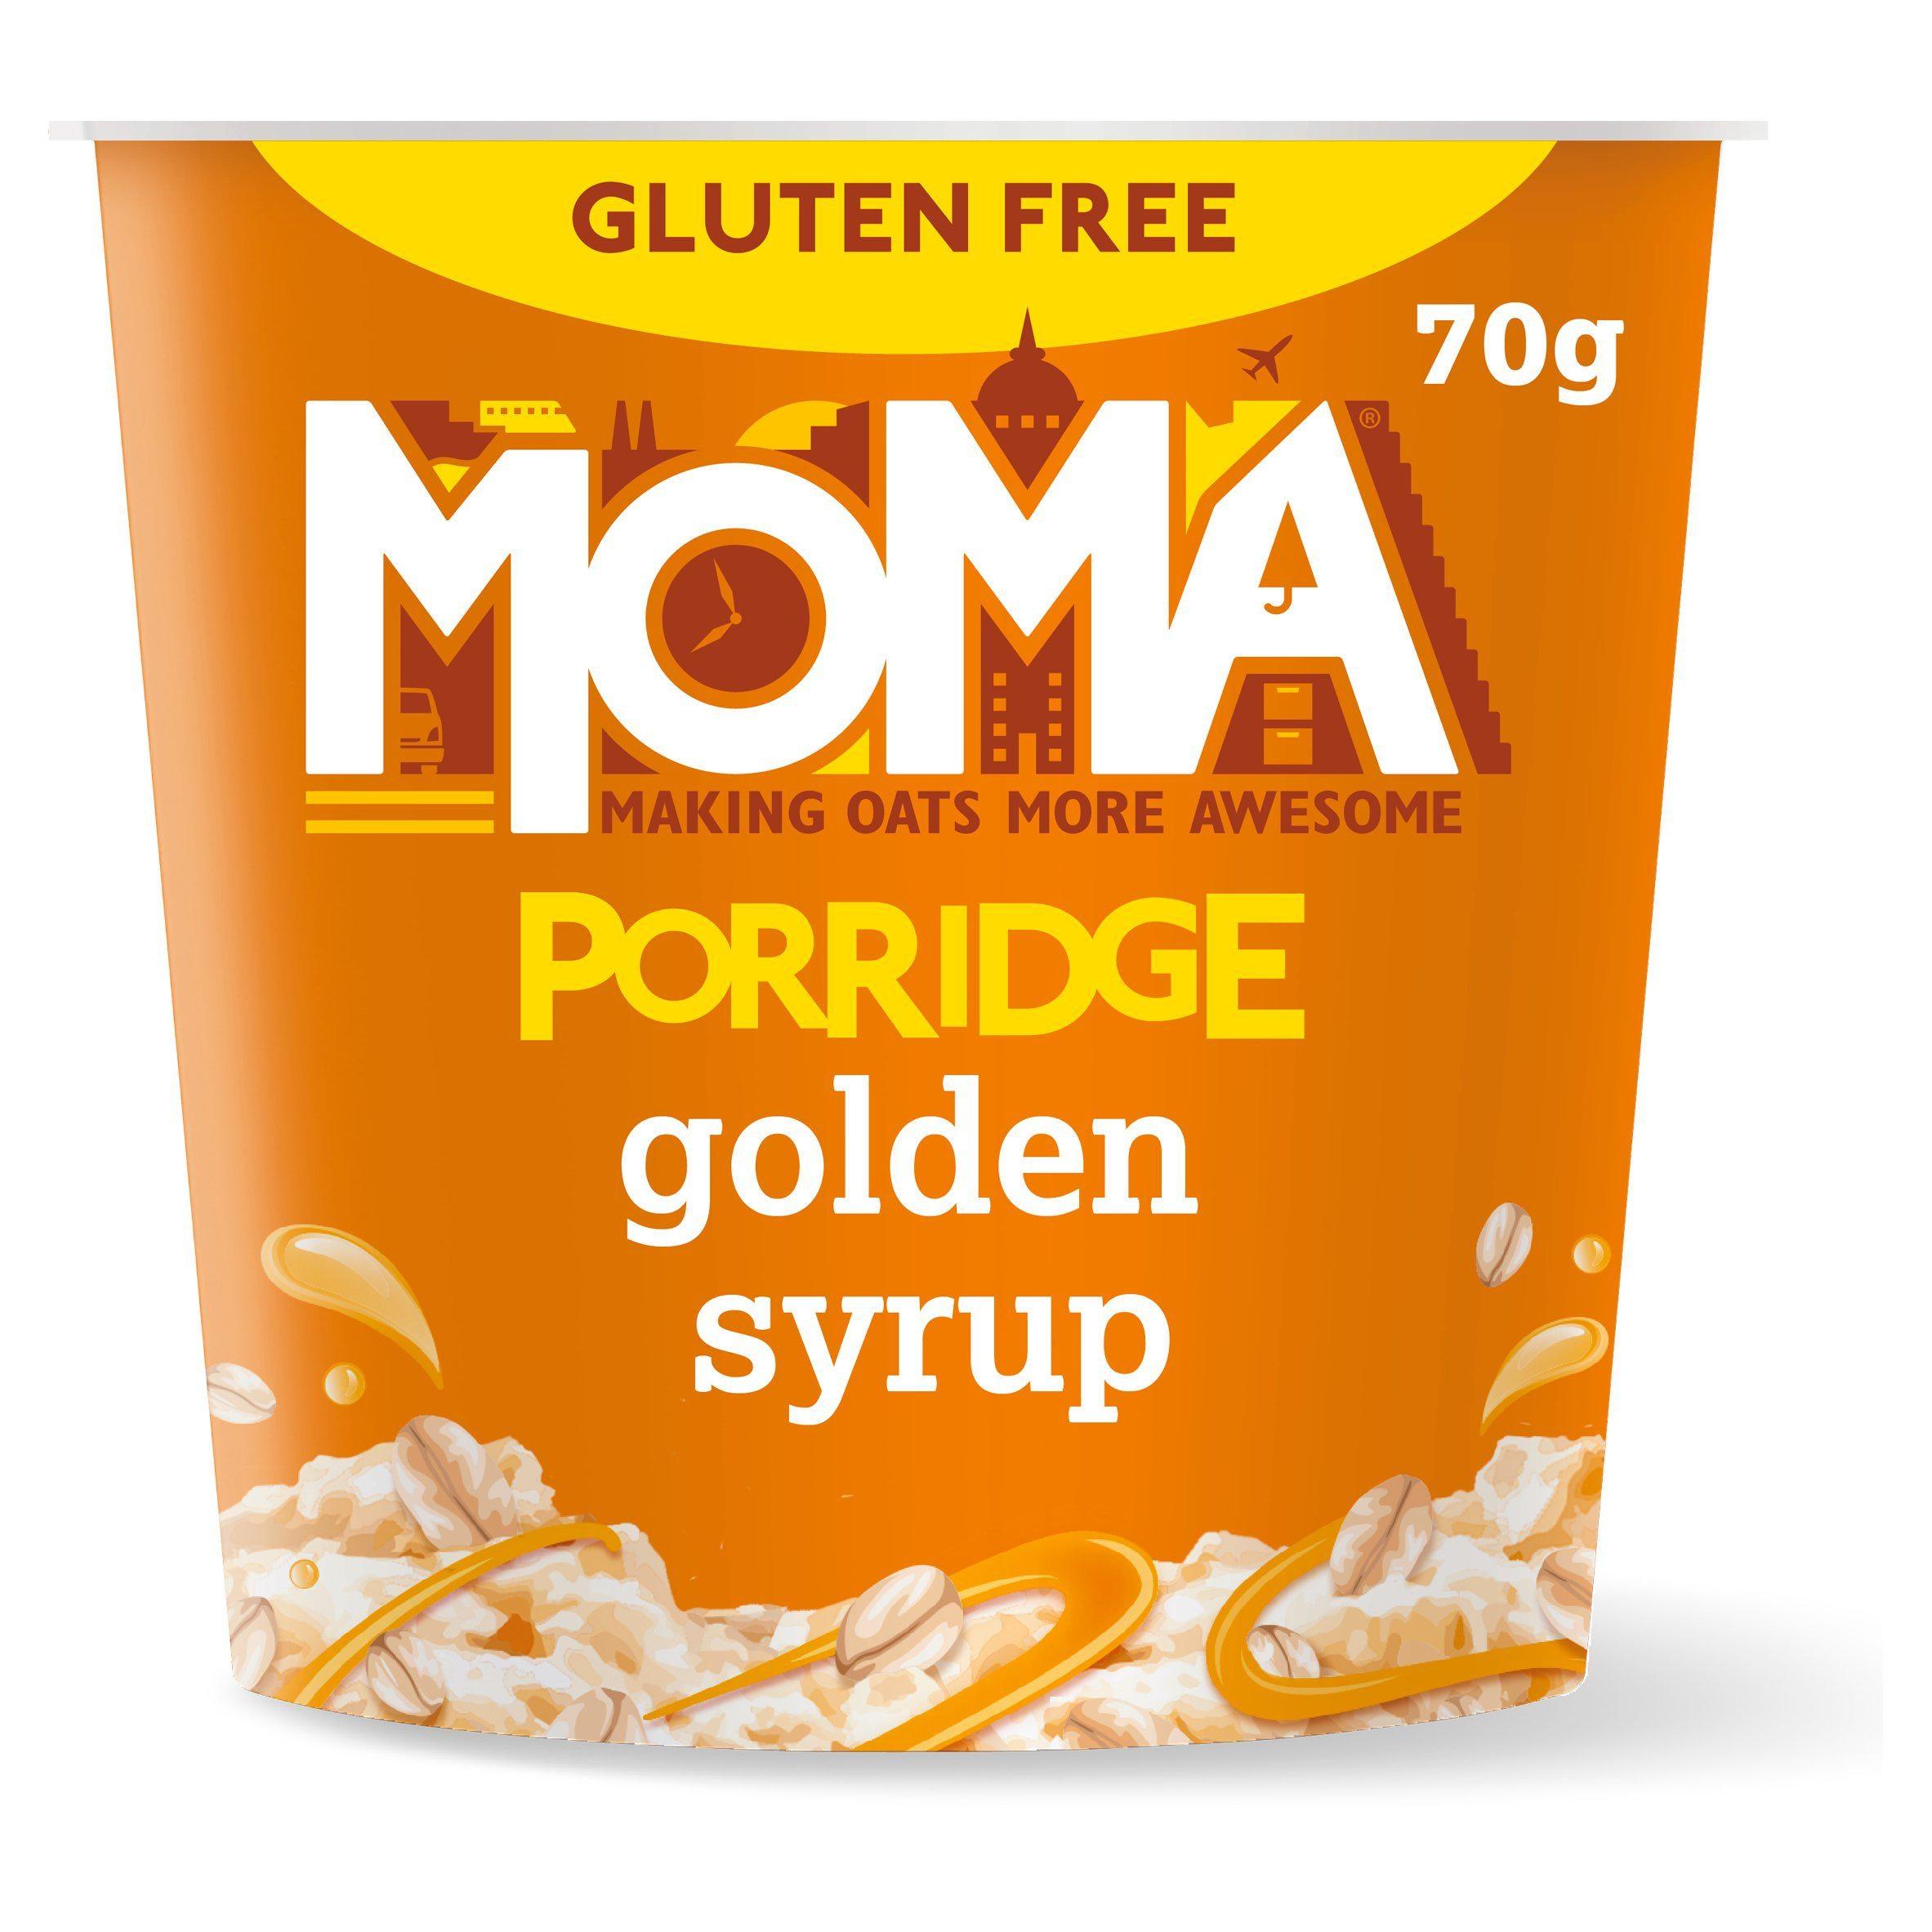 MOMA Instant Porridge Pots Golden Syrup - Pack of 12 (Gluten Free) - Vending Superstore